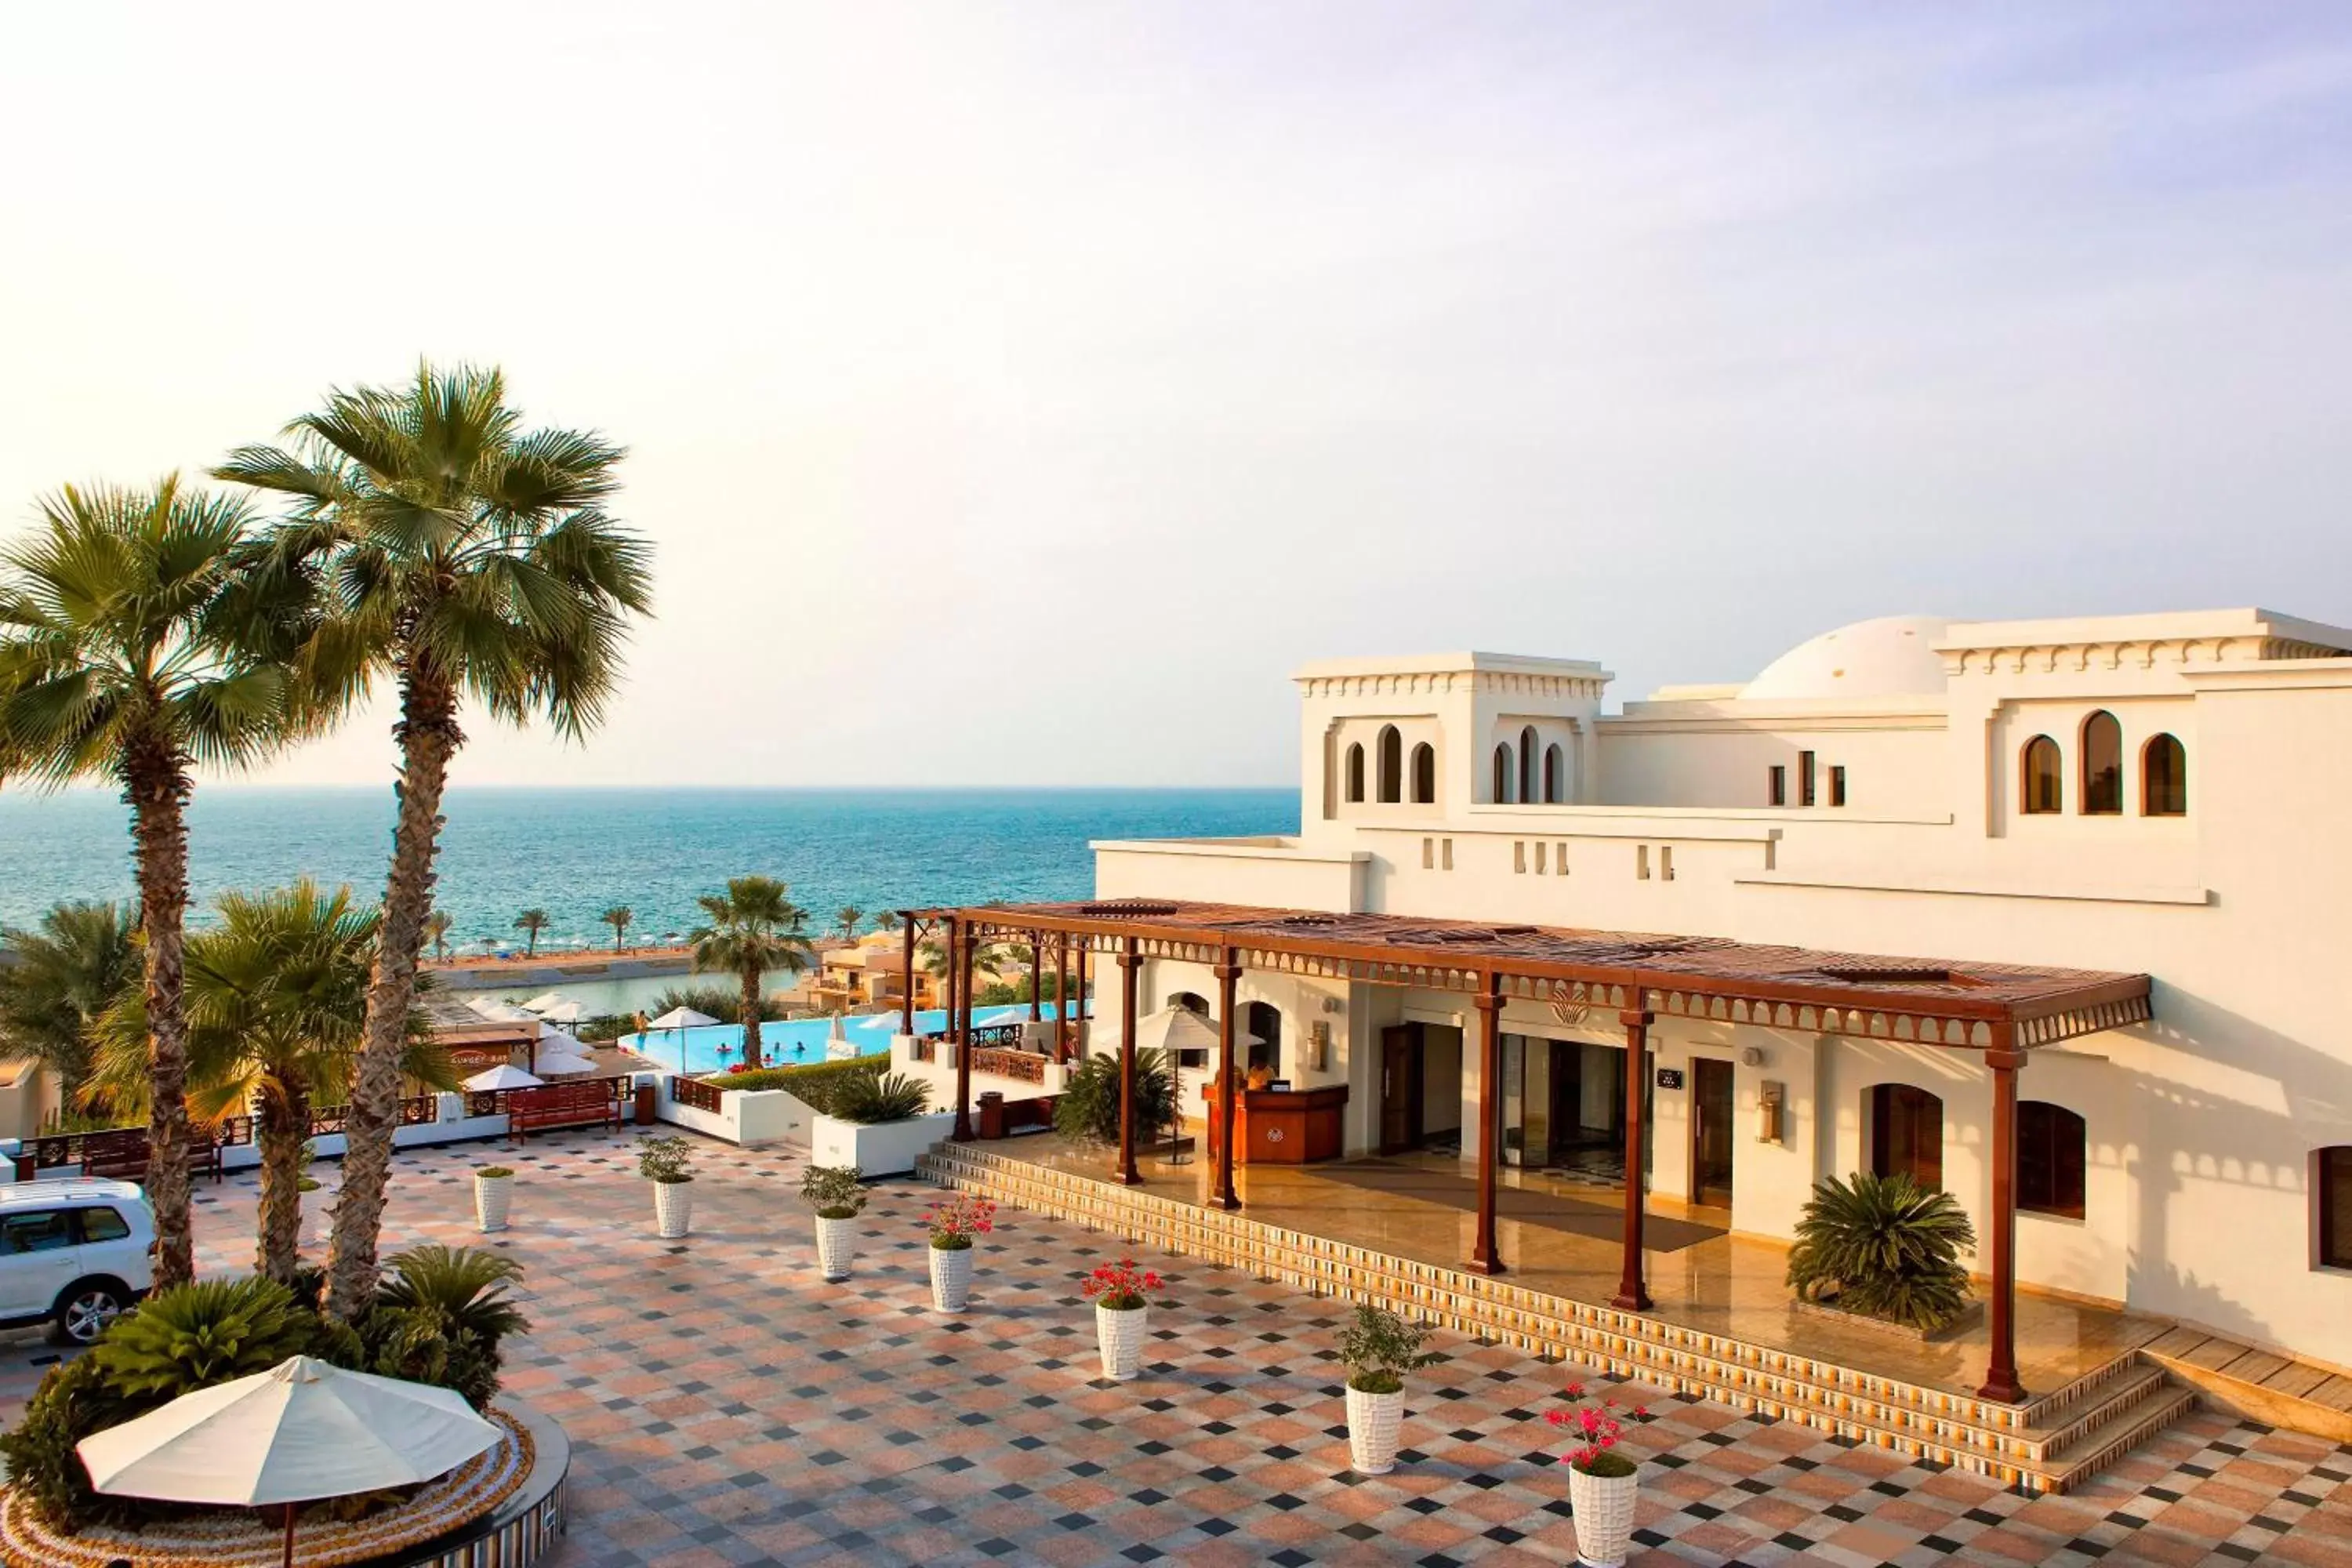 Facade/entrance in The Cove Rotana Resort - Ras Al Khaimah